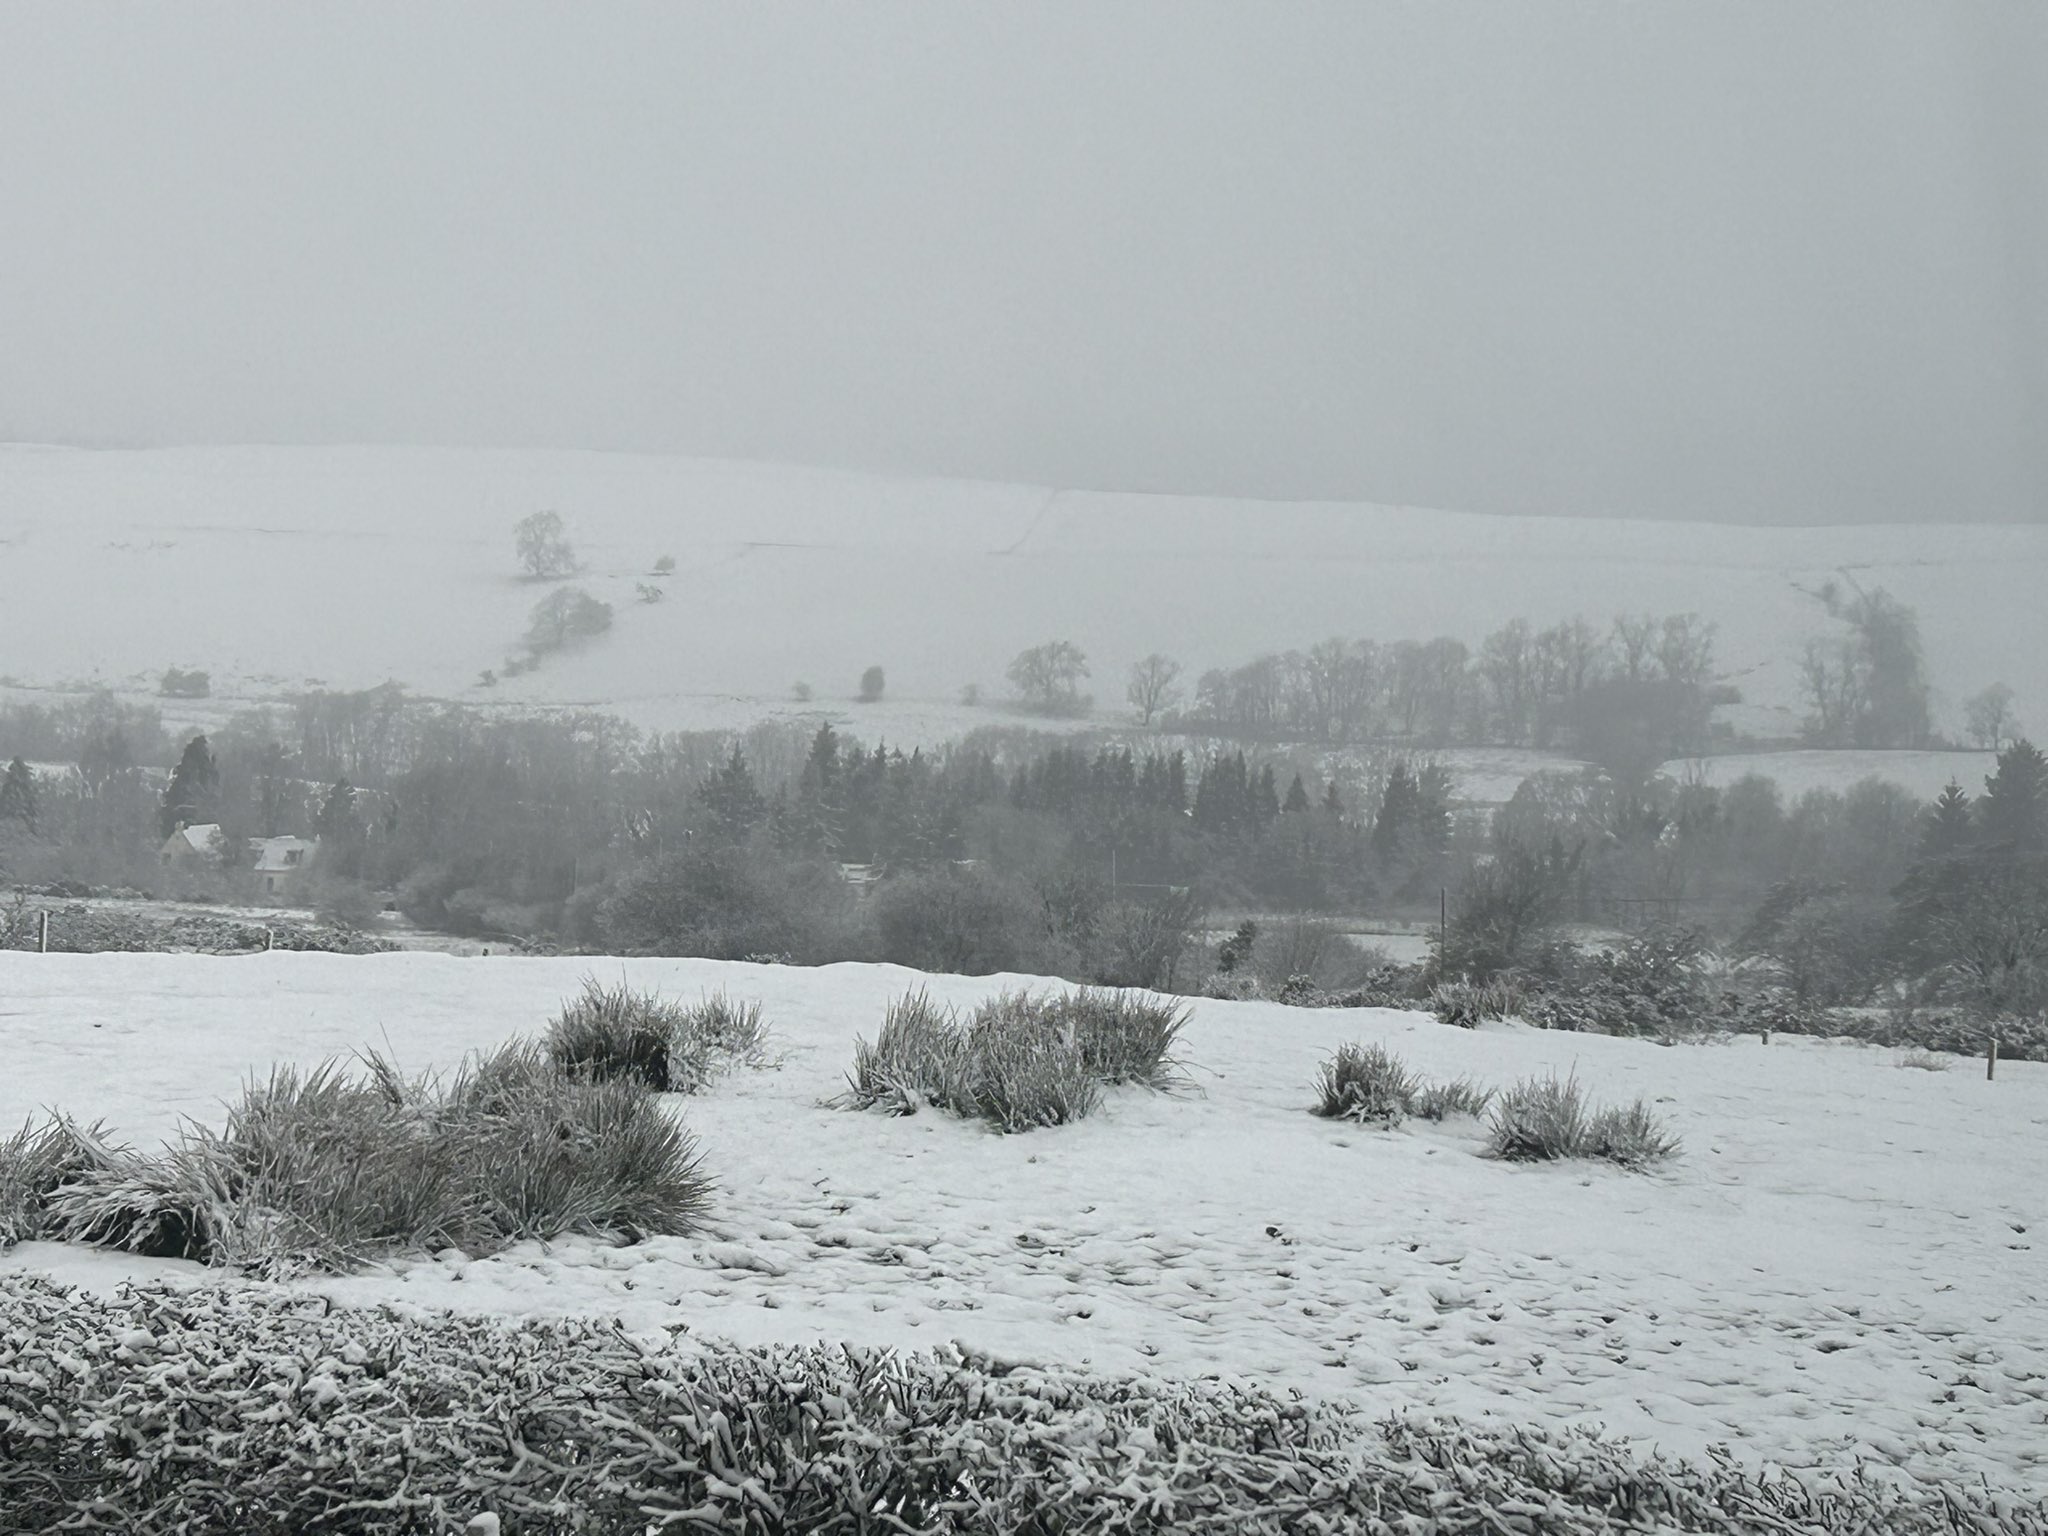 Aberfoyle residents awoke to a winter wonderland on their doorstep. 